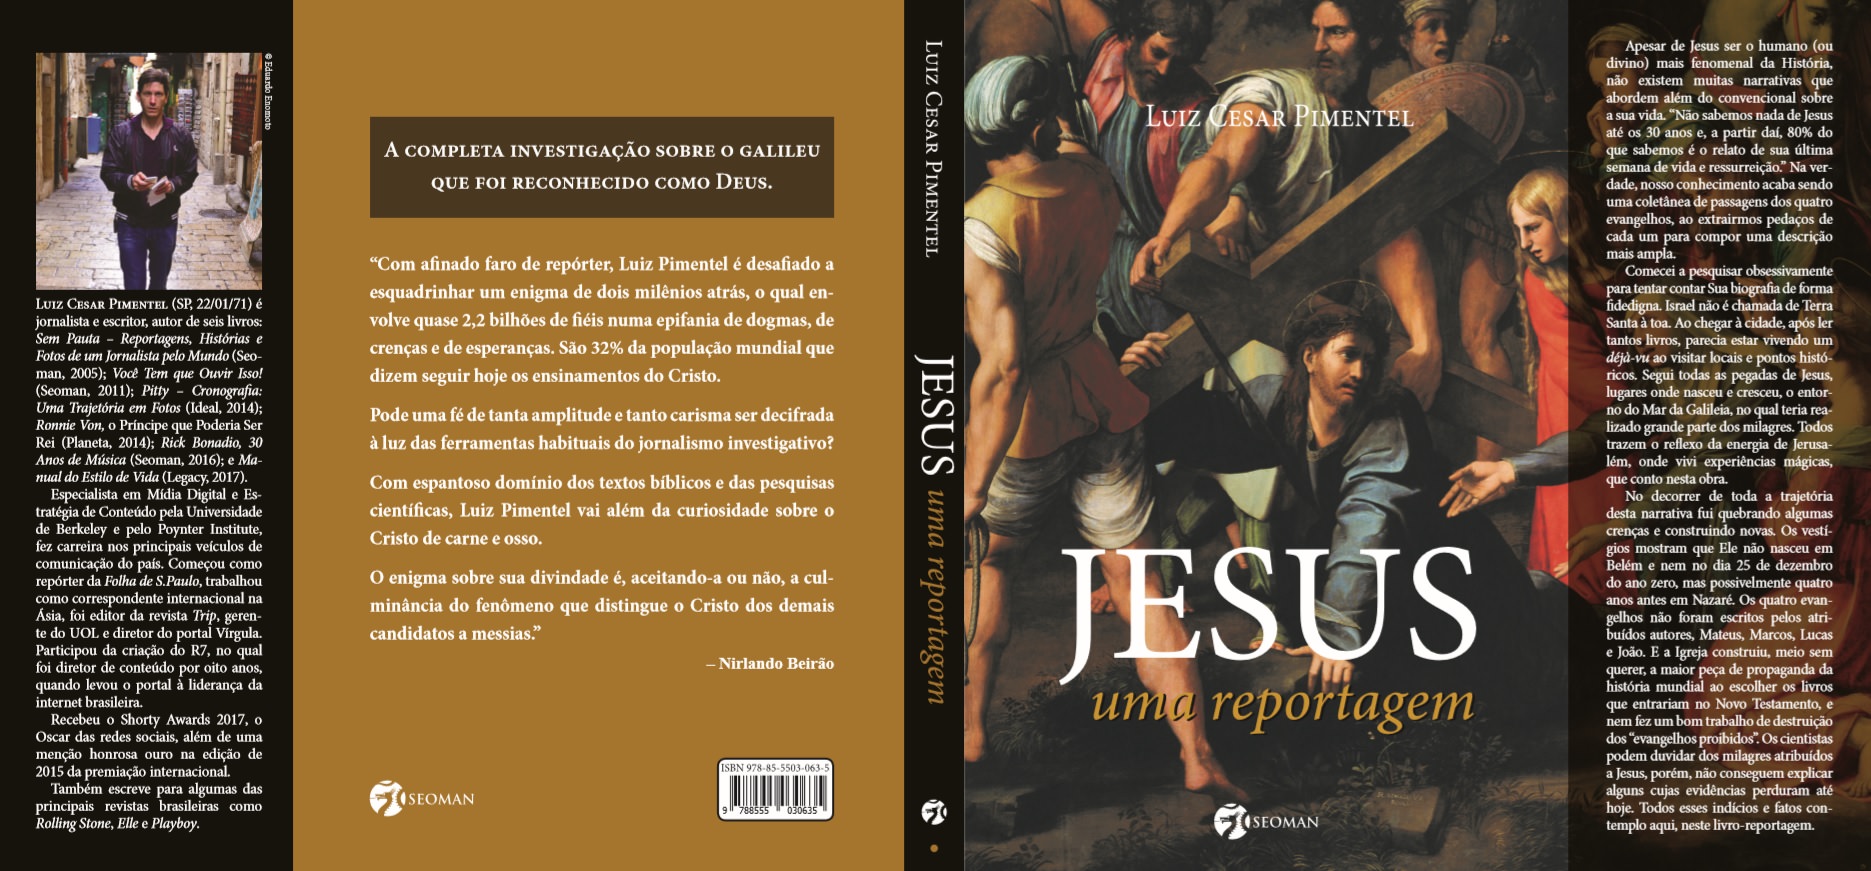 Libro "Gesù, Un Reportage "Luiz Cesar Pimentel, copertura. Foto: MF Global Press.